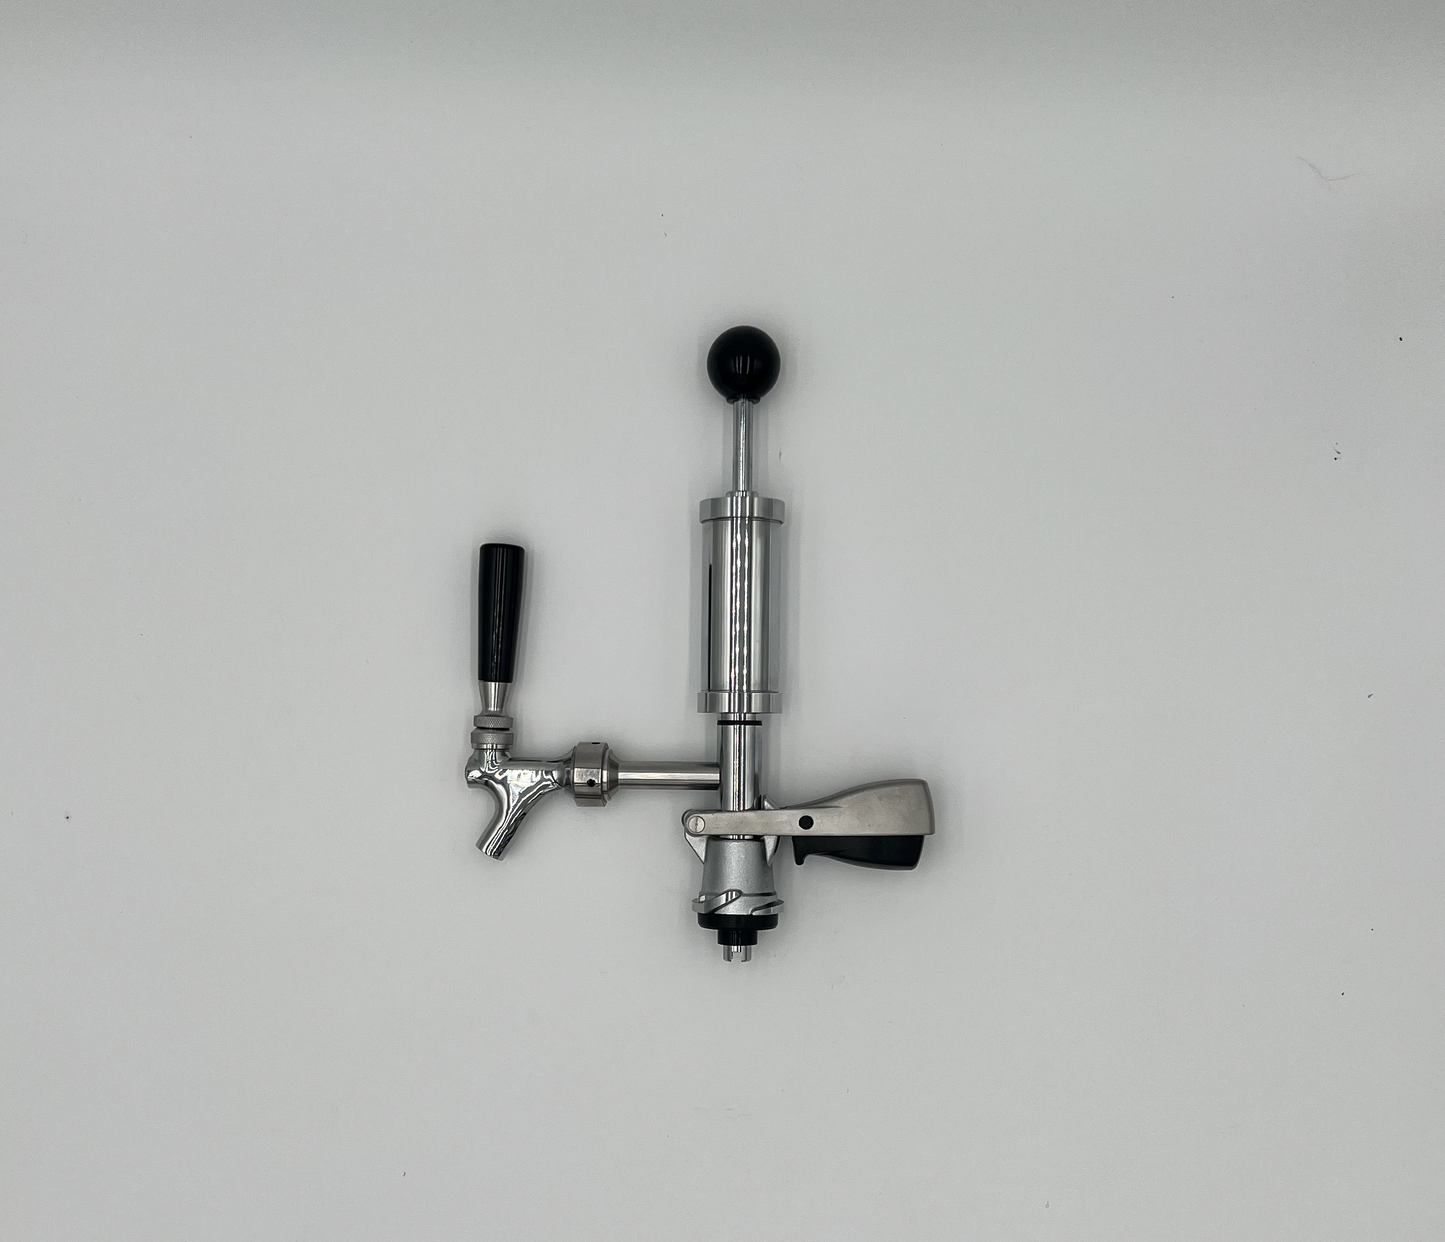 5L Custom logo Pump Keg with NON-adjustable flow tap dispenser; NO keg opener